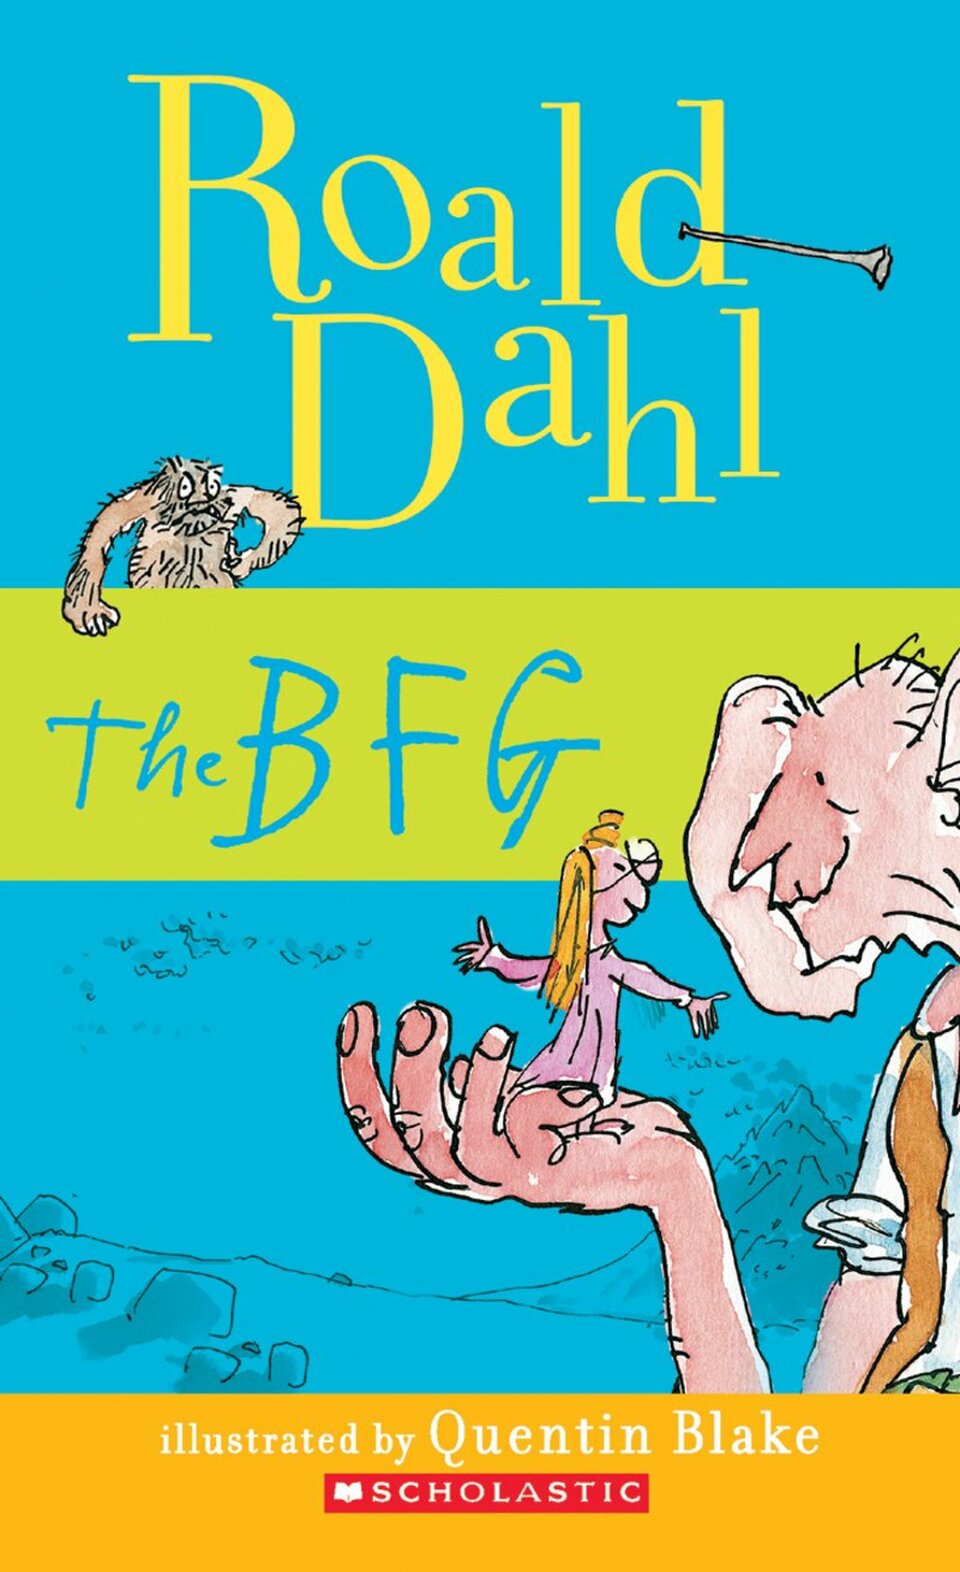 'The BFG' by Roald Dahl (Photo courtesy of Scholastic)